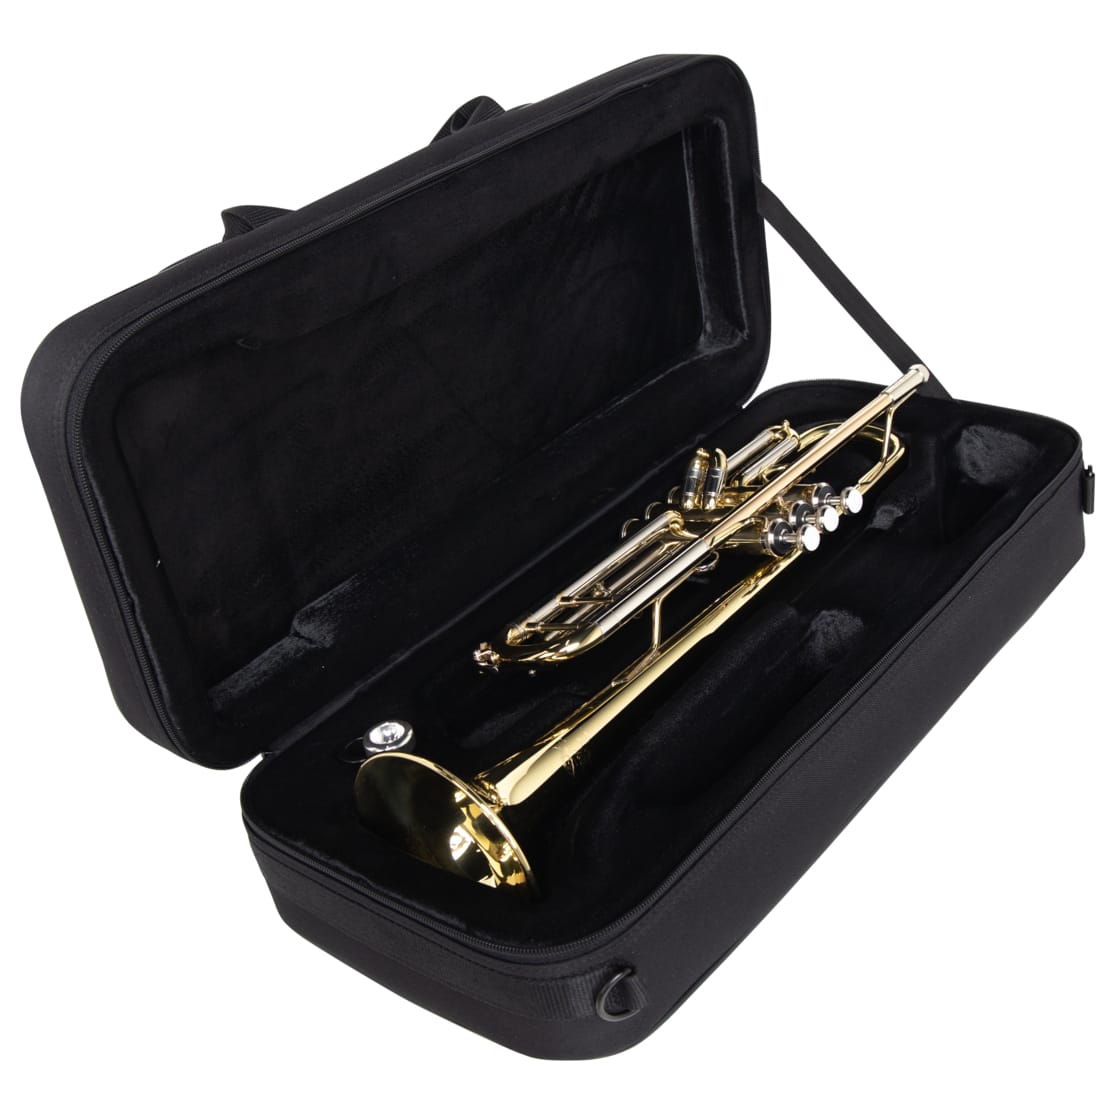 Lightweight Beginner Case for Trumpet